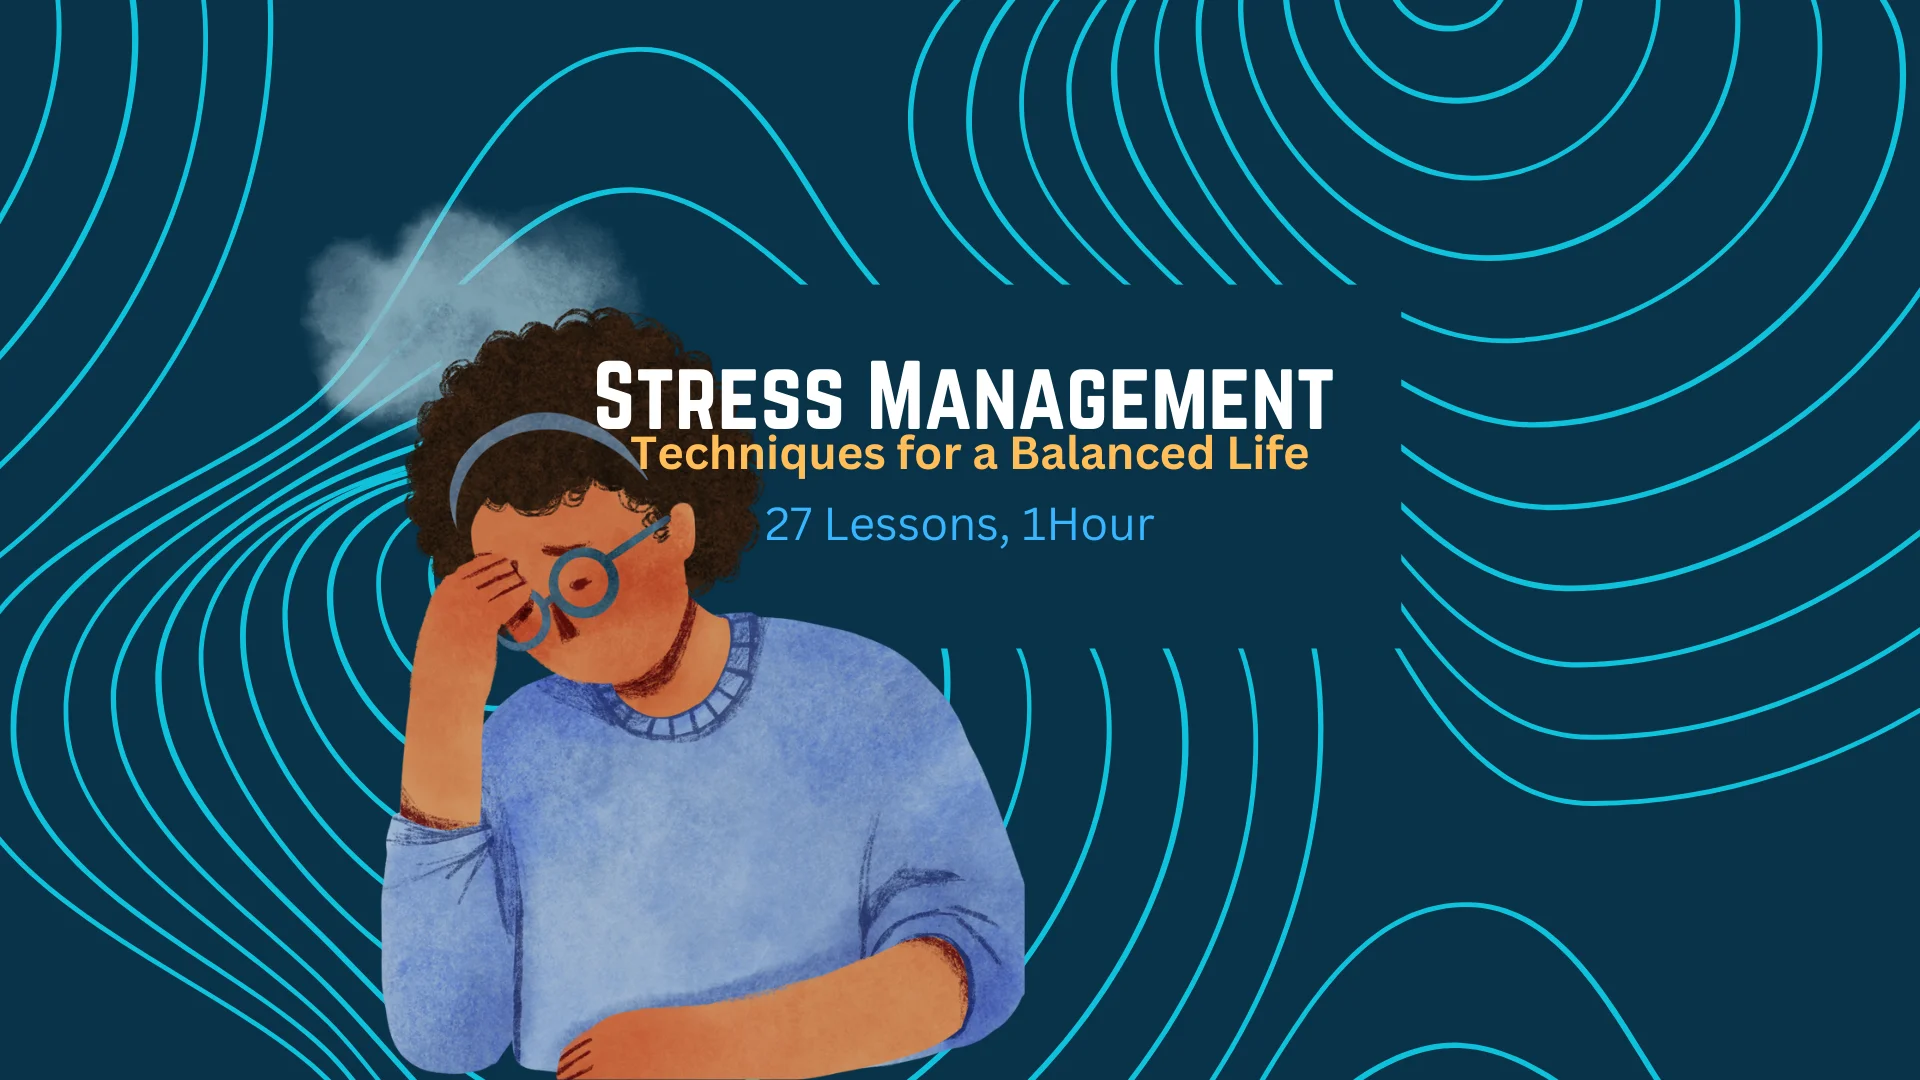 Stress management techniques for a balance life